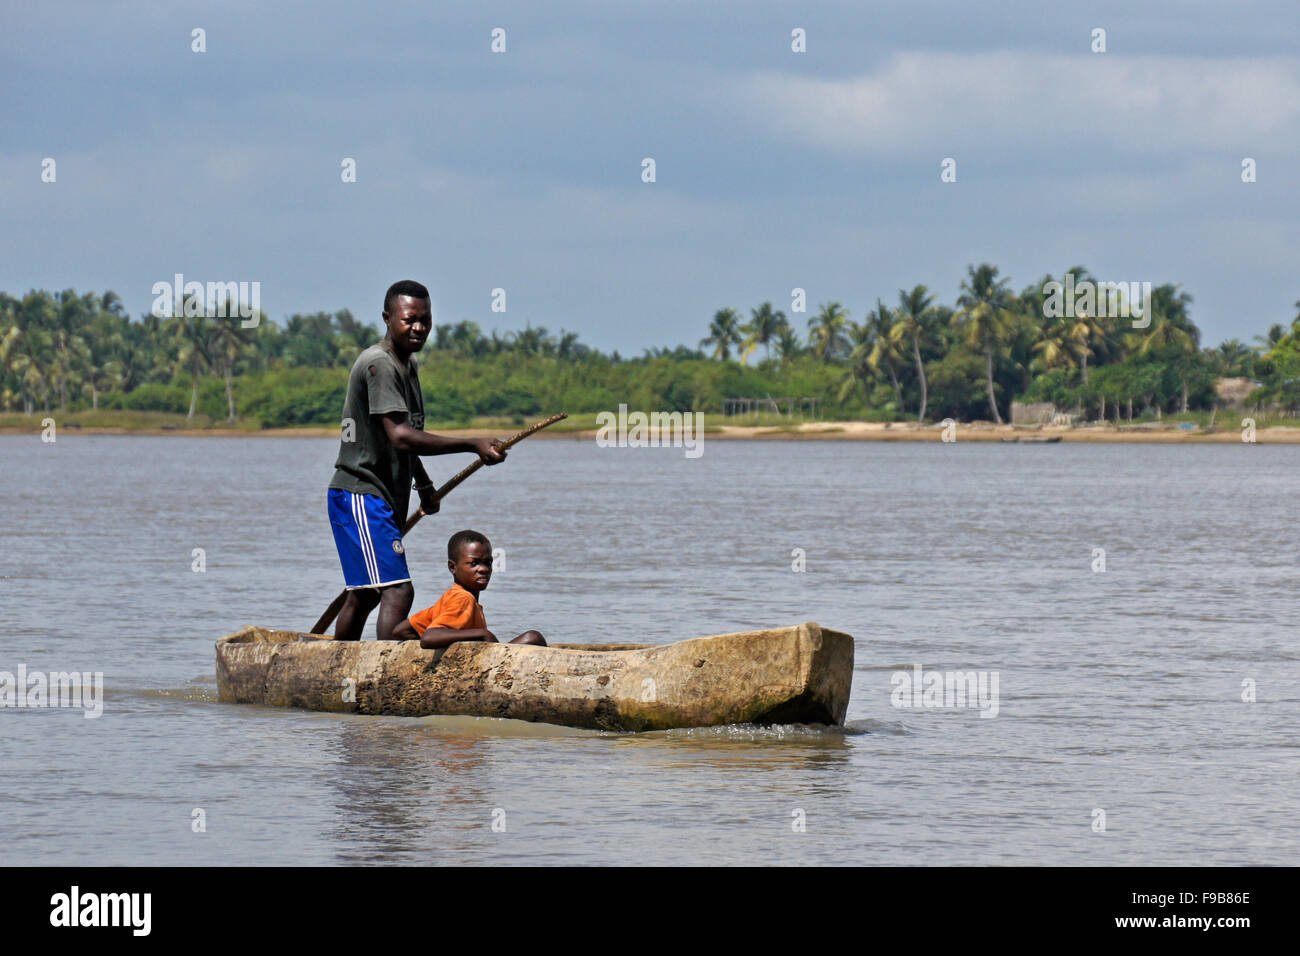 Fon man and son in dugout canoe on the Mono River, Benin Stock Photo